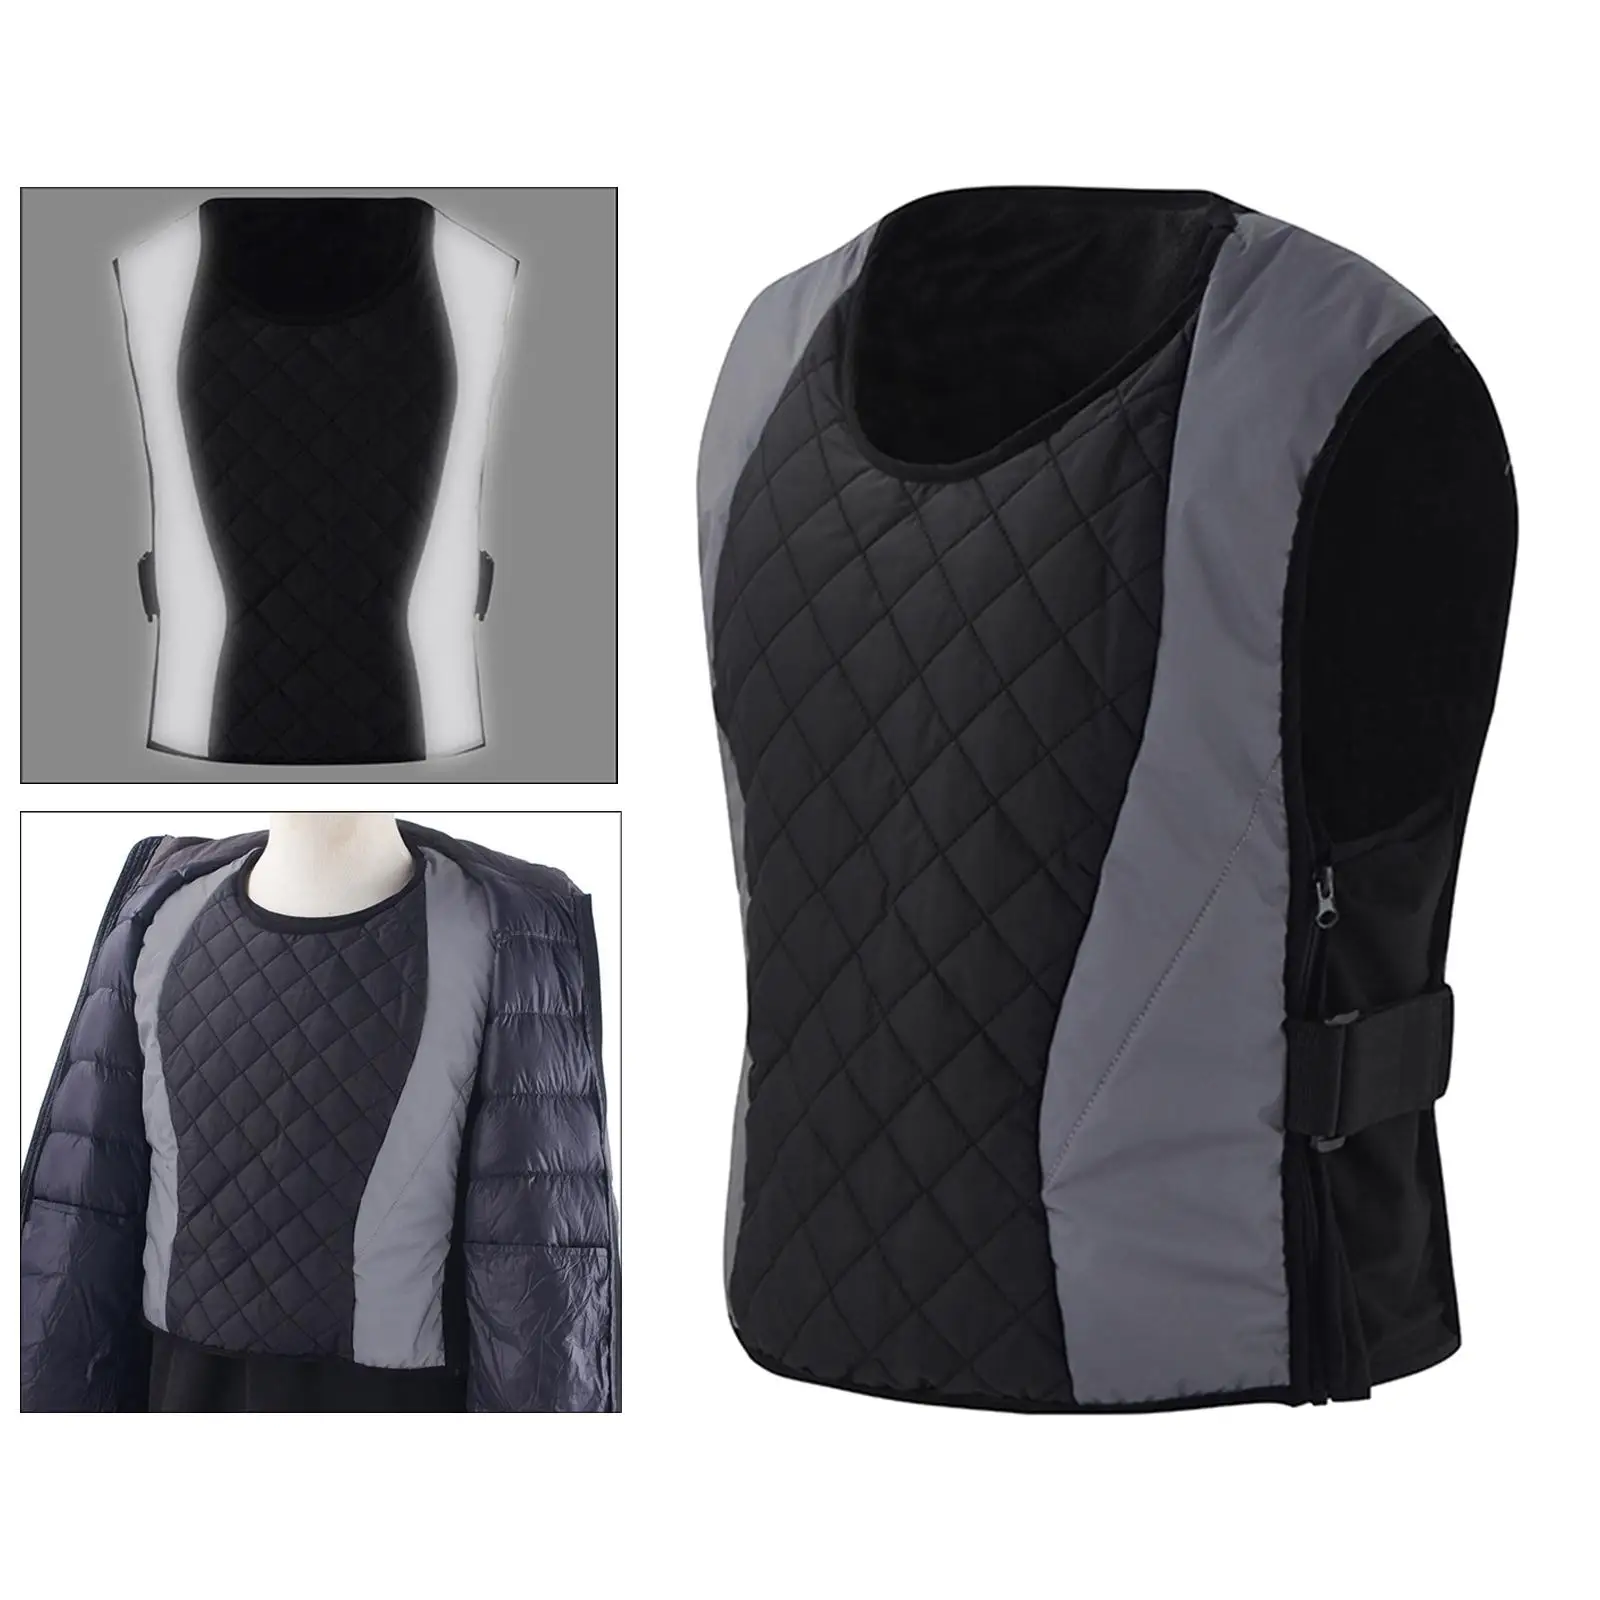 Thermal  Warm Windproof Cold Resistance Adjustable Top Jacket W/Pocket Breathable Reflective for Unisex Bike Walking Jogging